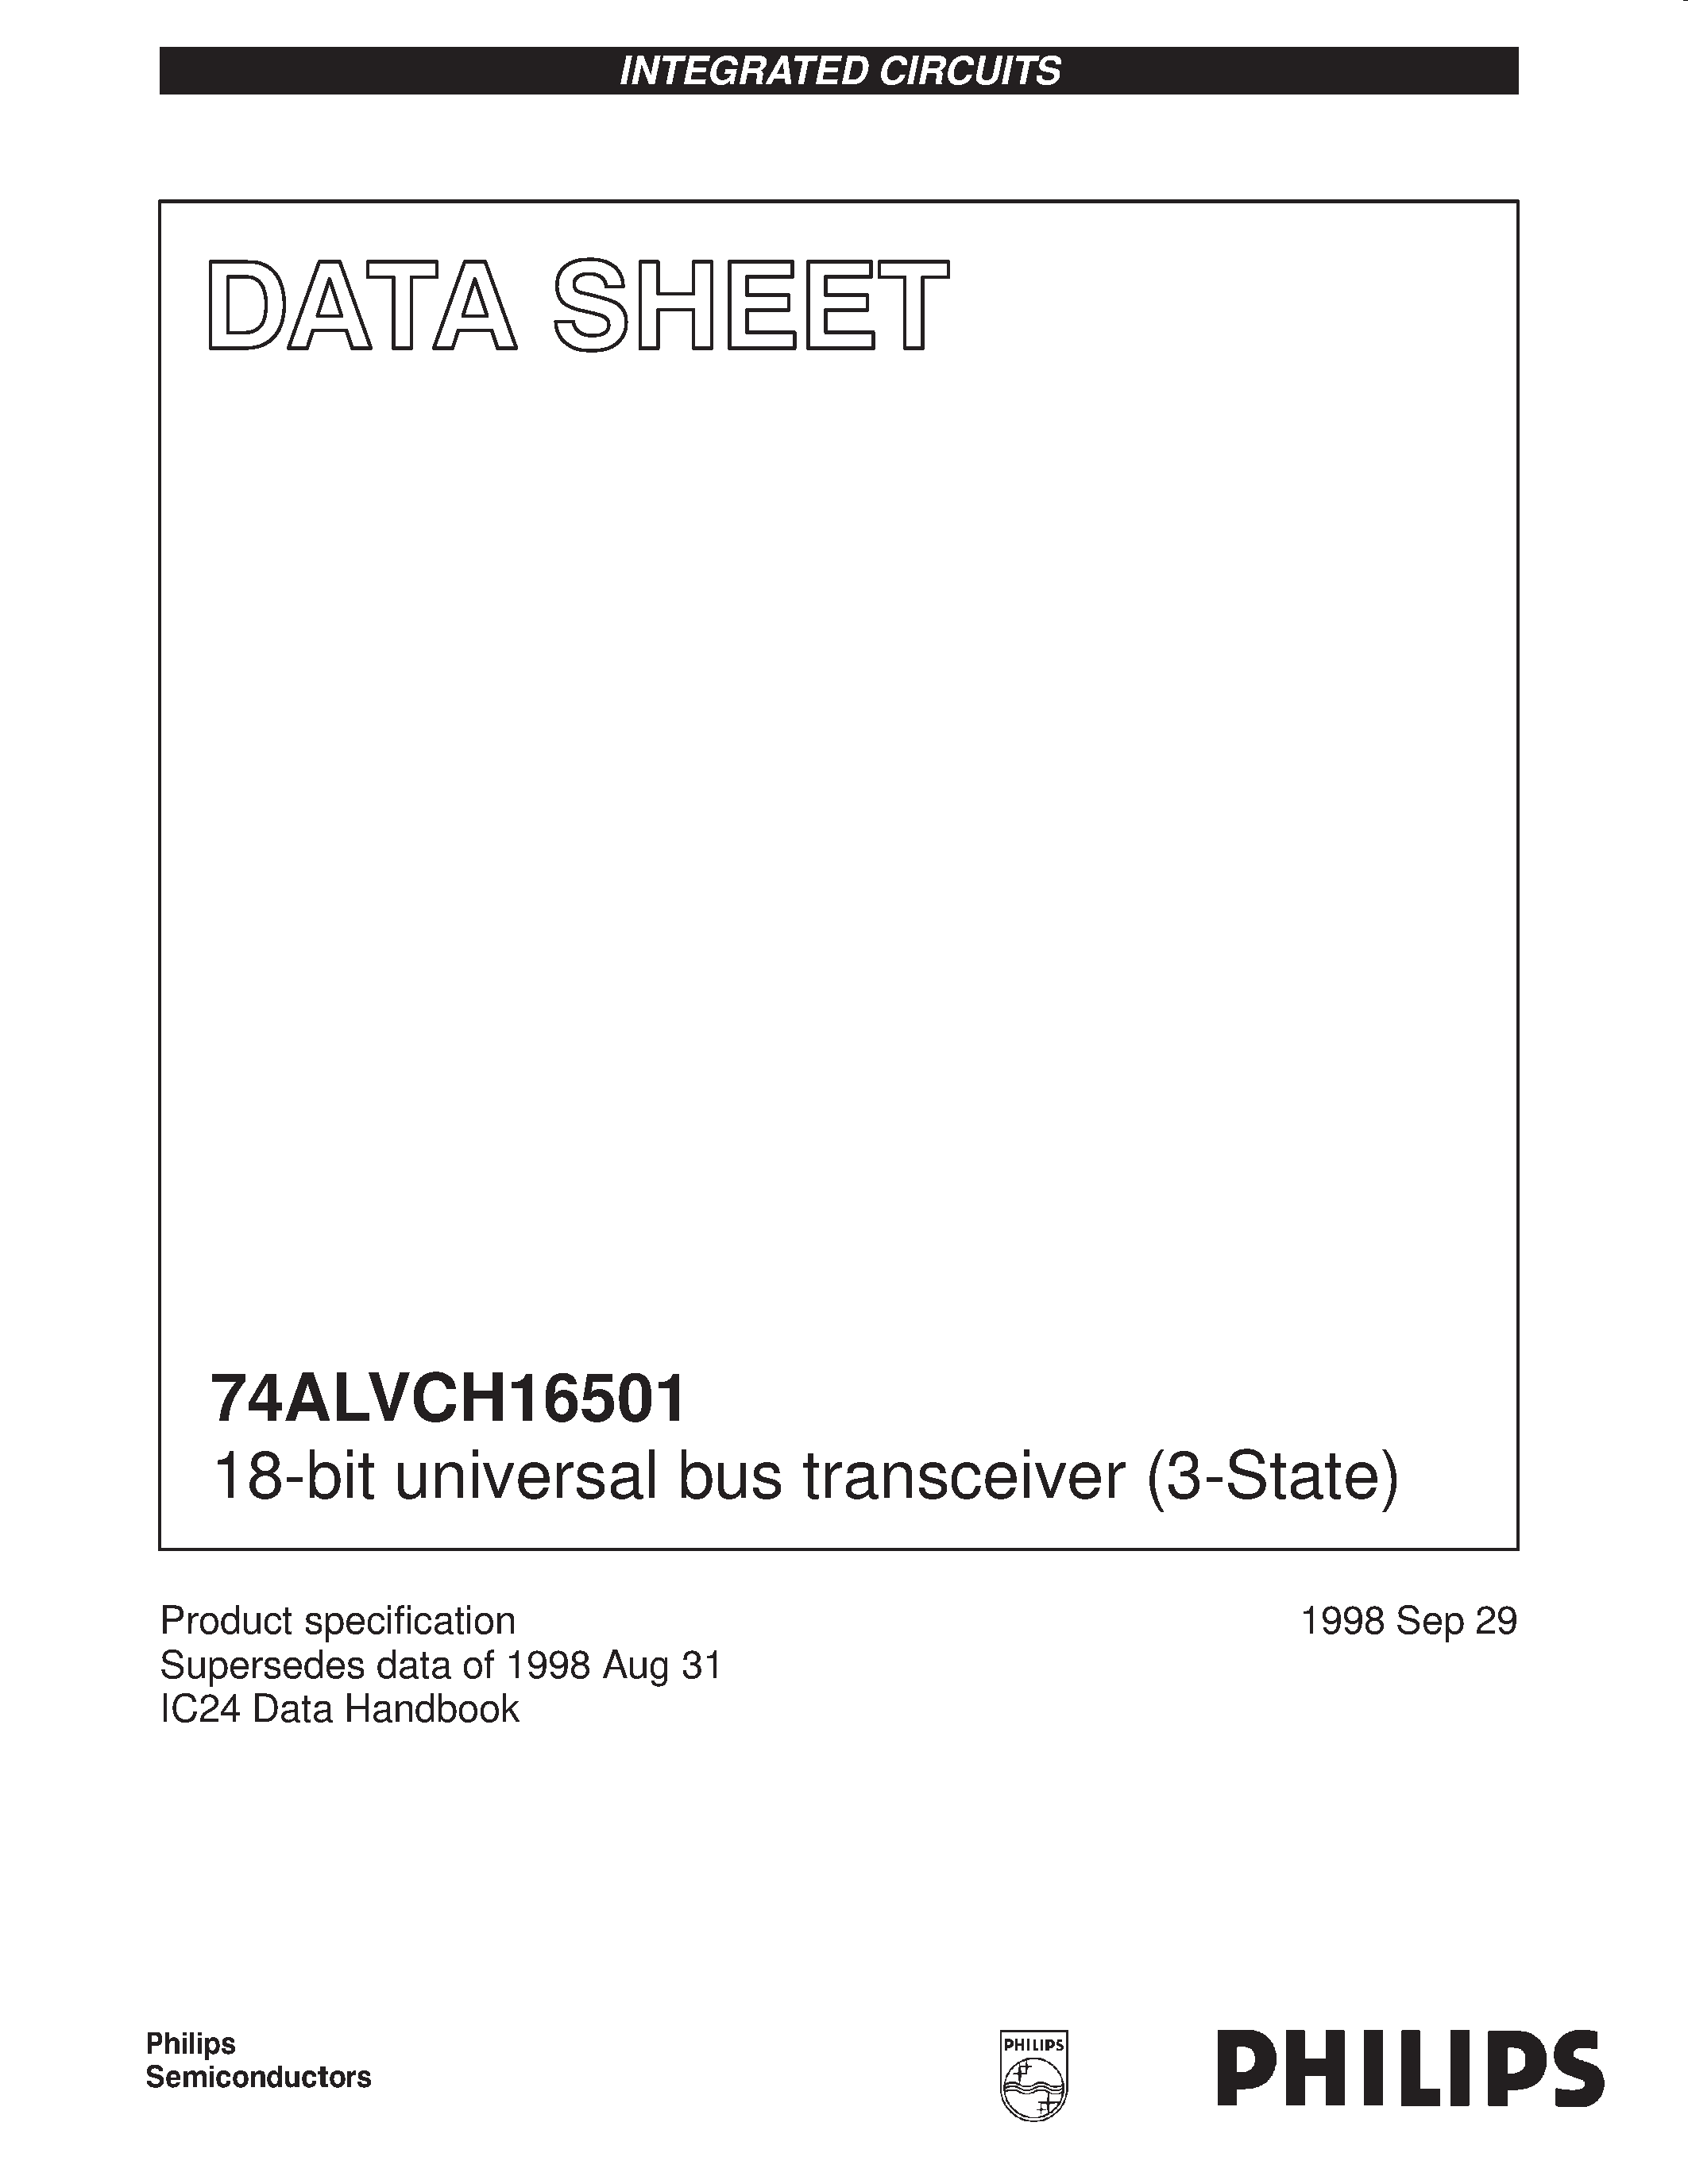 Datasheet 74ALVCH16501 - 18-bit universal bus transceiver 3-State page 1